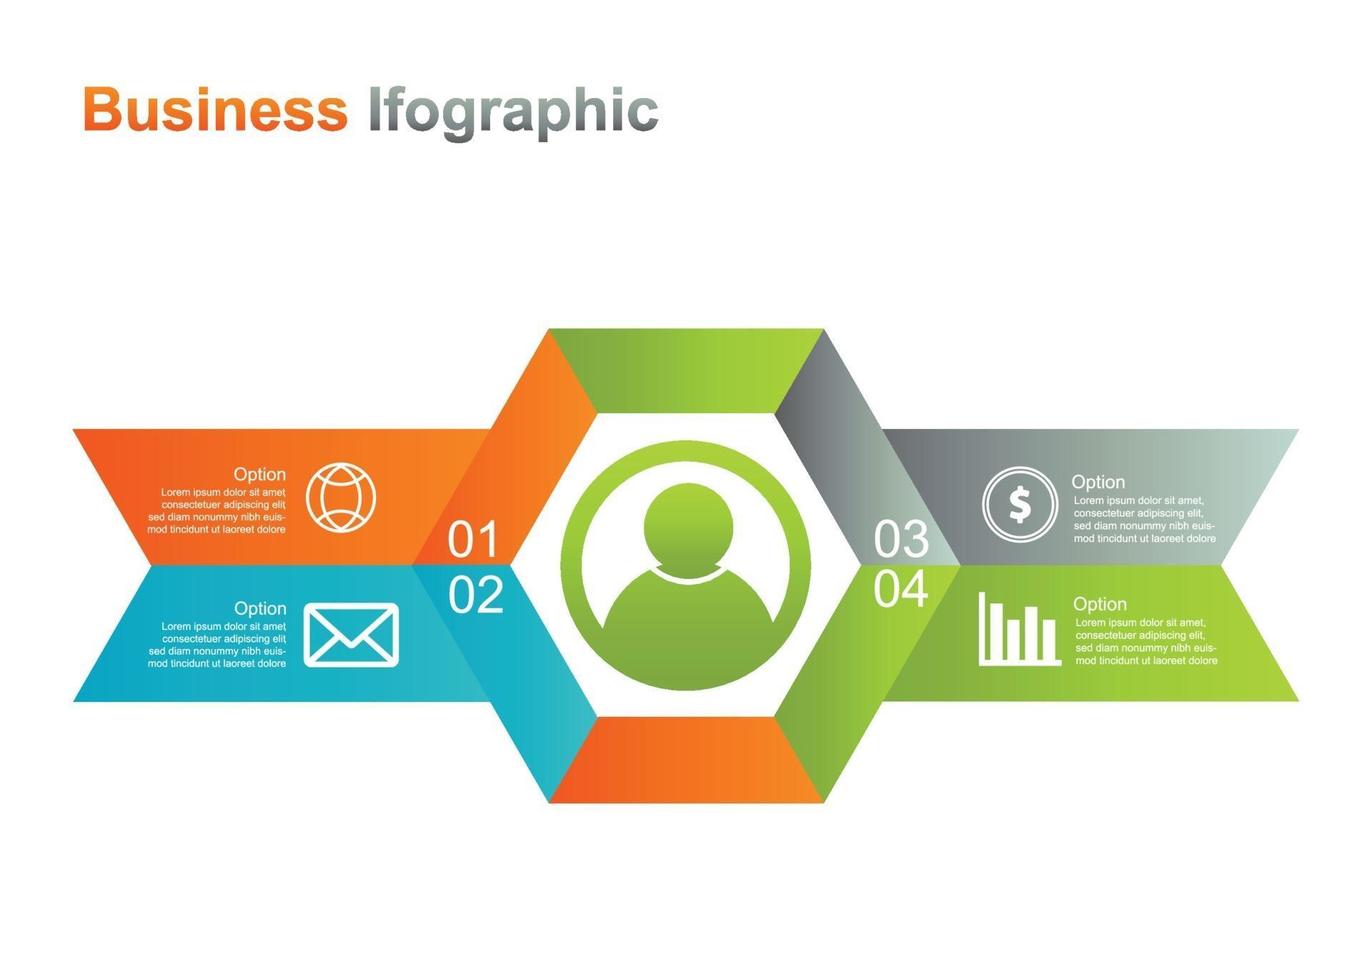 business infograpic design template. 4 option infographic vector illustration. perfect for marketing, promotion, presentation design element